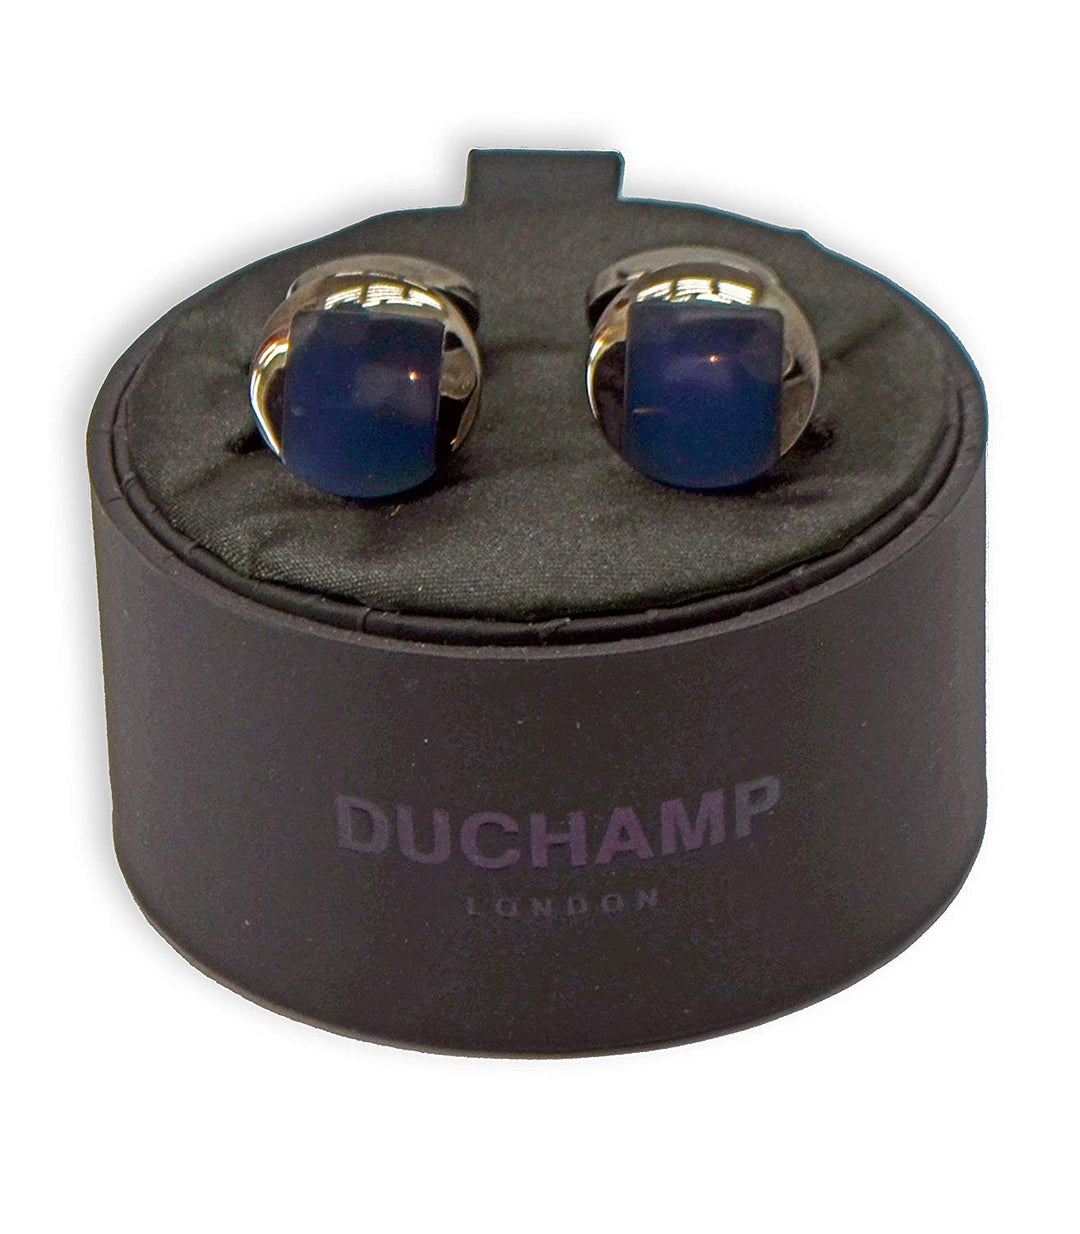 Duchamp London Blue Cuff Links